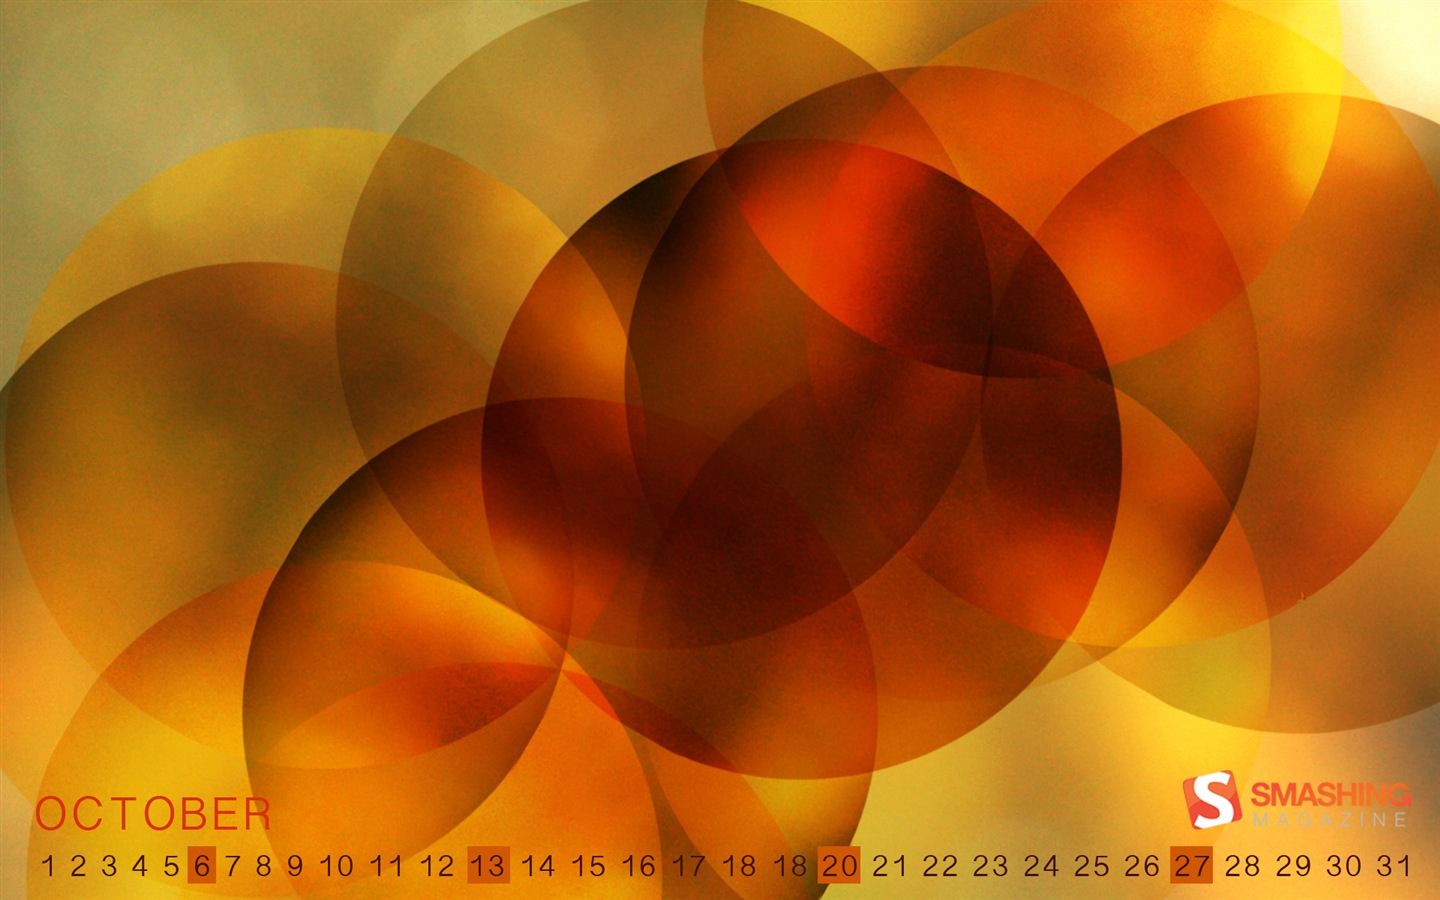 October 2013 calendar wallpaper (2) #8 - 1440x900